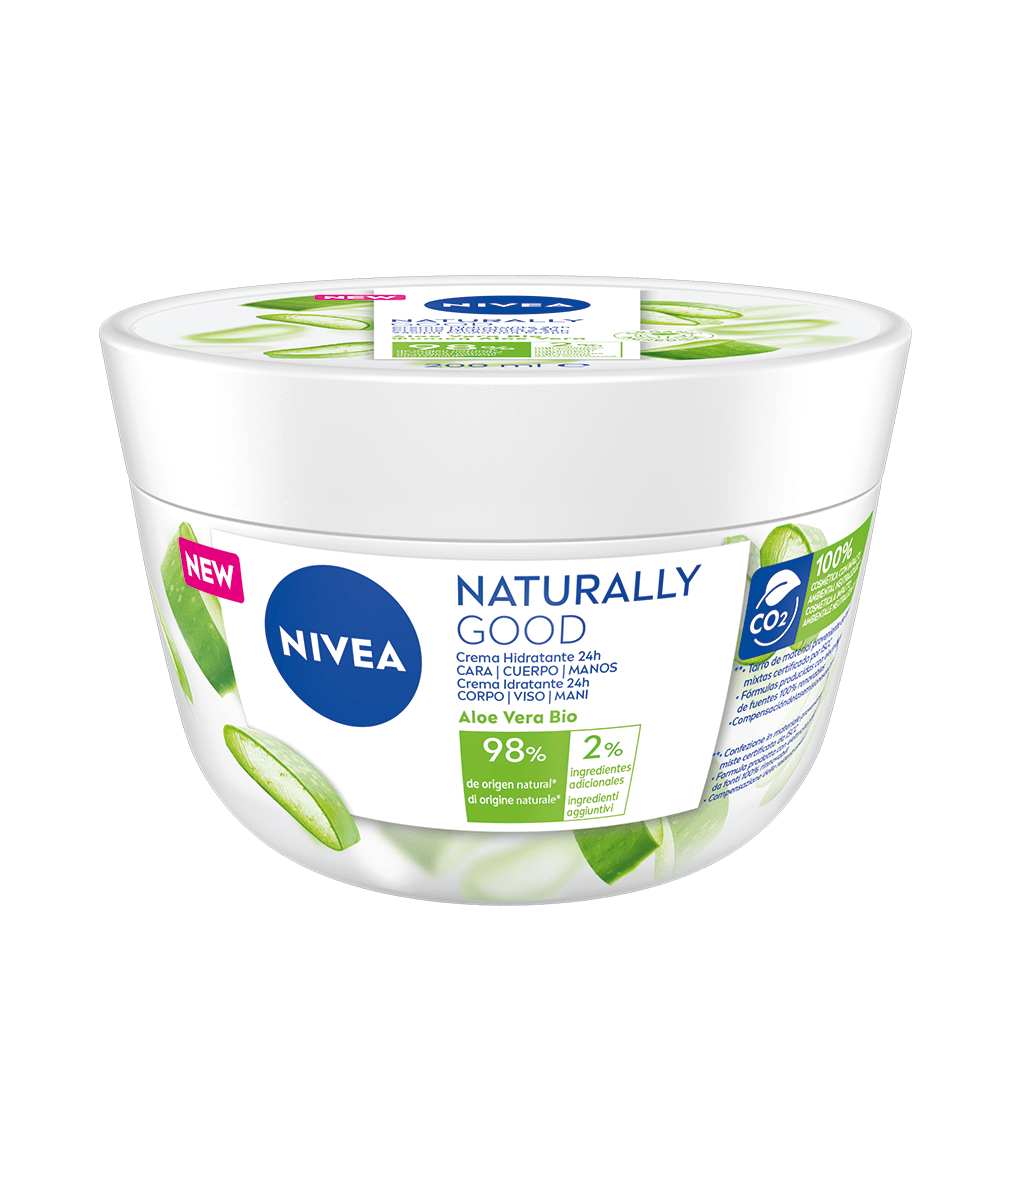 Naturally Good Crema Hidratante 24h Aloe Vera BIO  | NIVEA